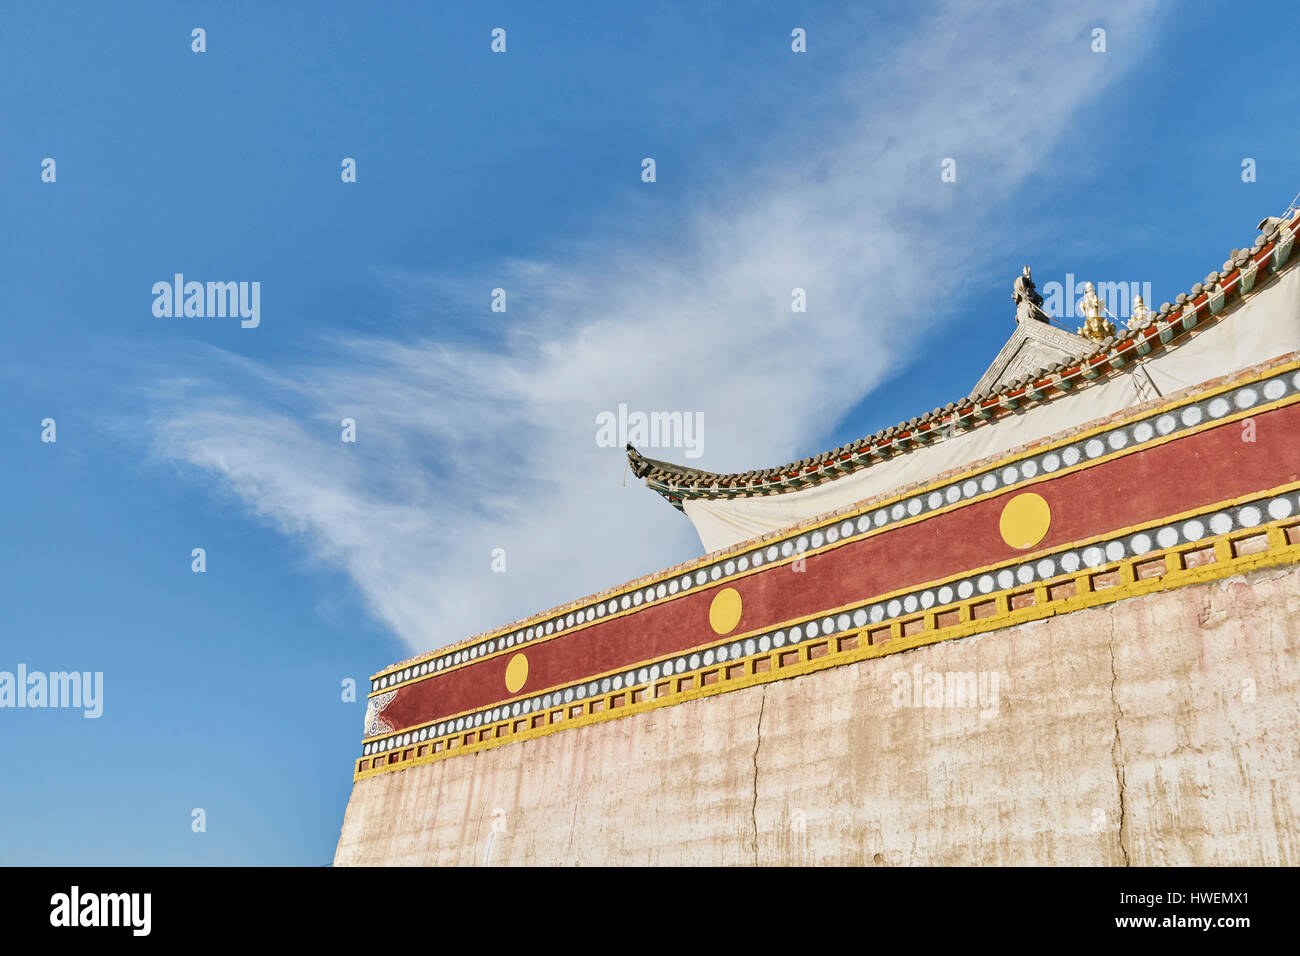 Tibetisches Kloster, Periode Stadt, Tongren, Provinz Qinghai, China Stockfoto